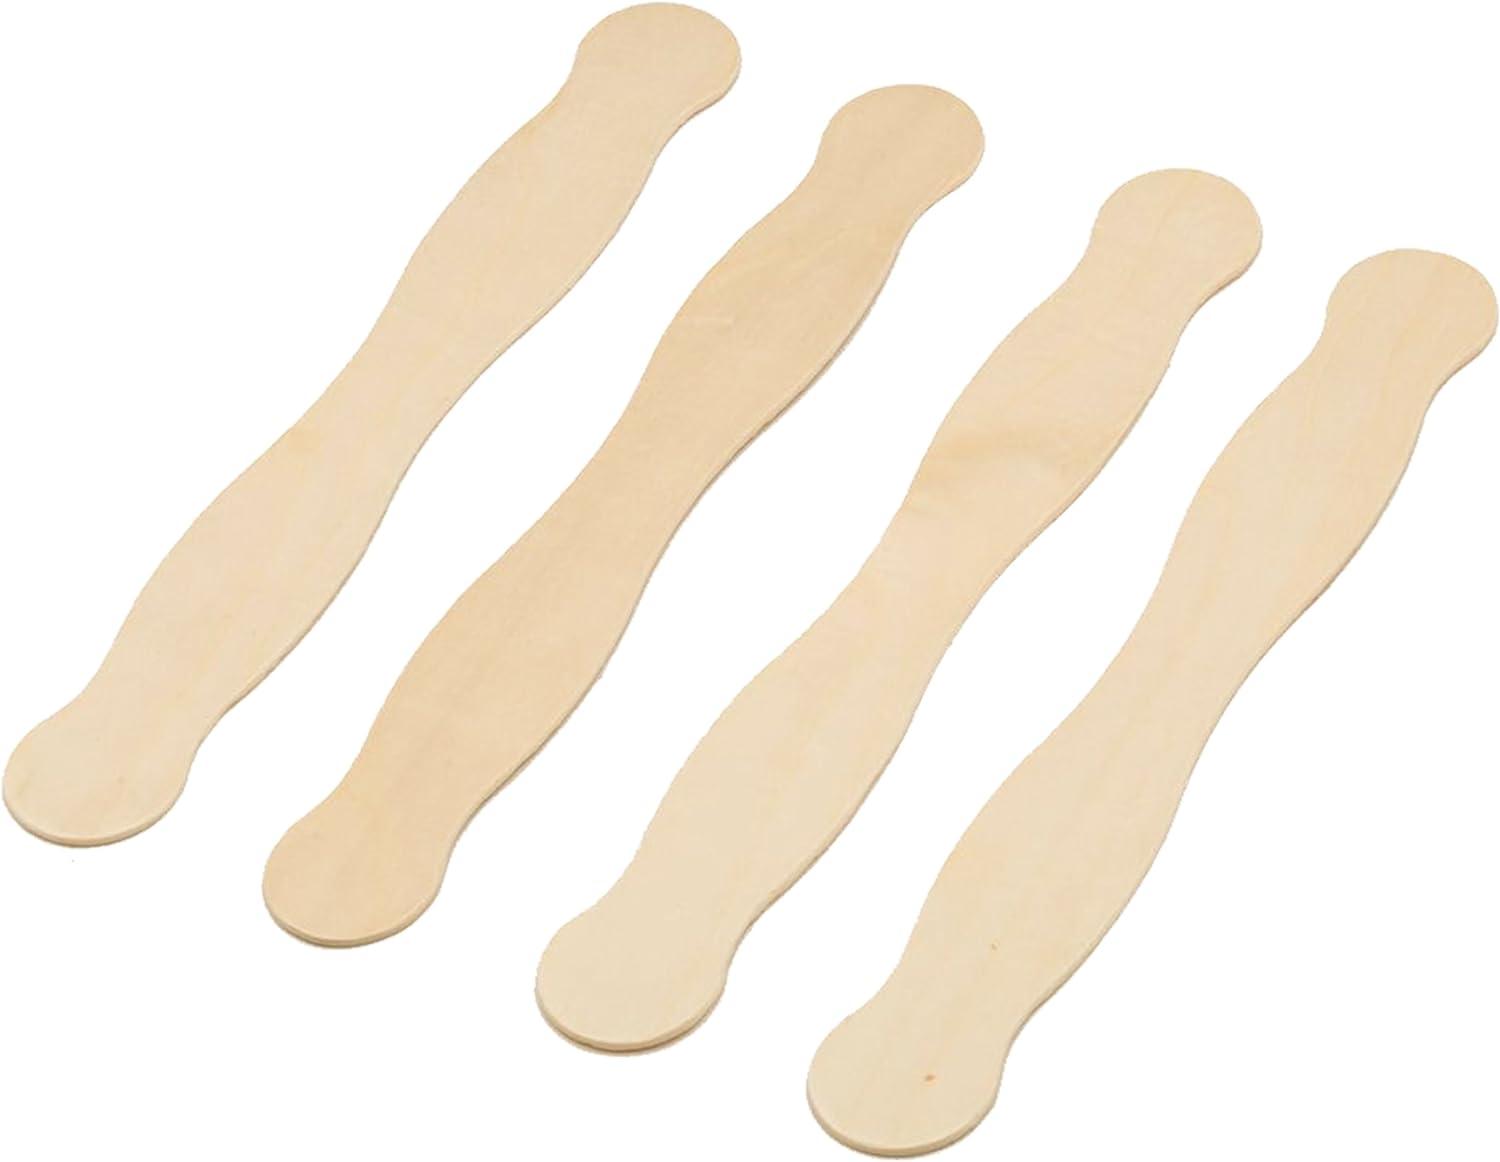 Jumbo Unfinished Wood Craft Sticks - Popsicle Sticks / Fan Sticks